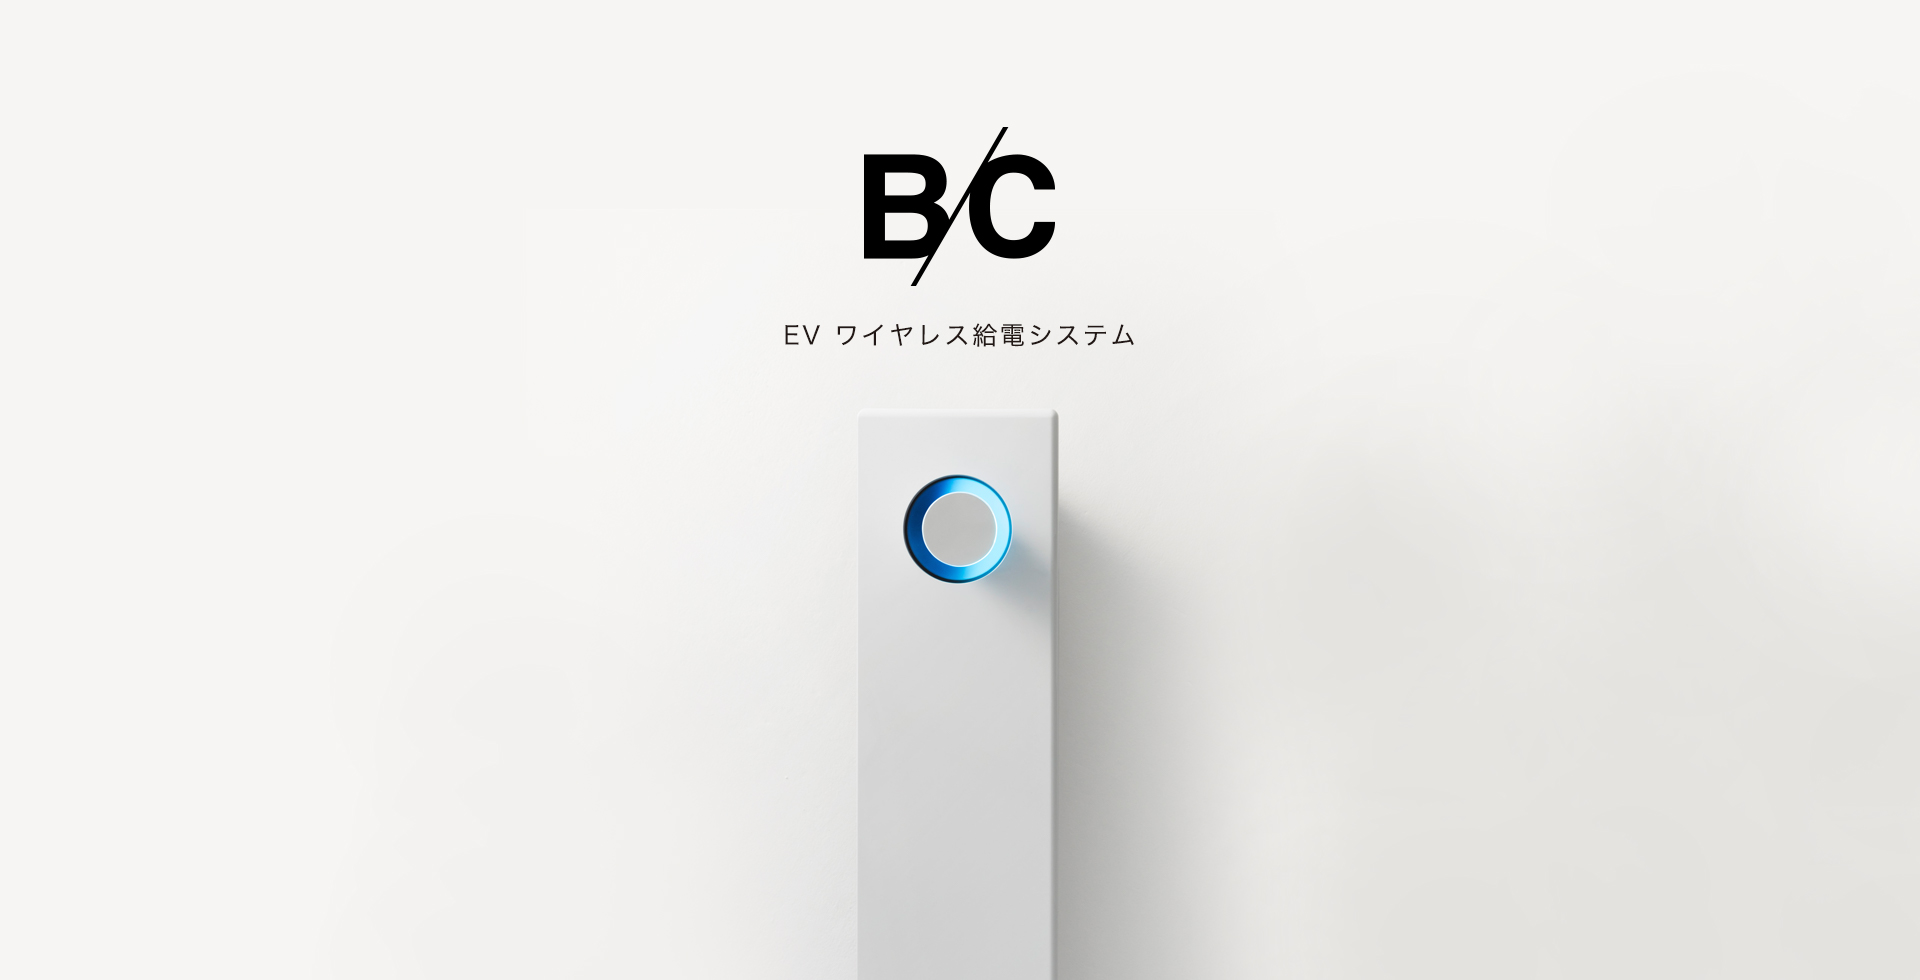 B/C EV ワイヤレス給電システム